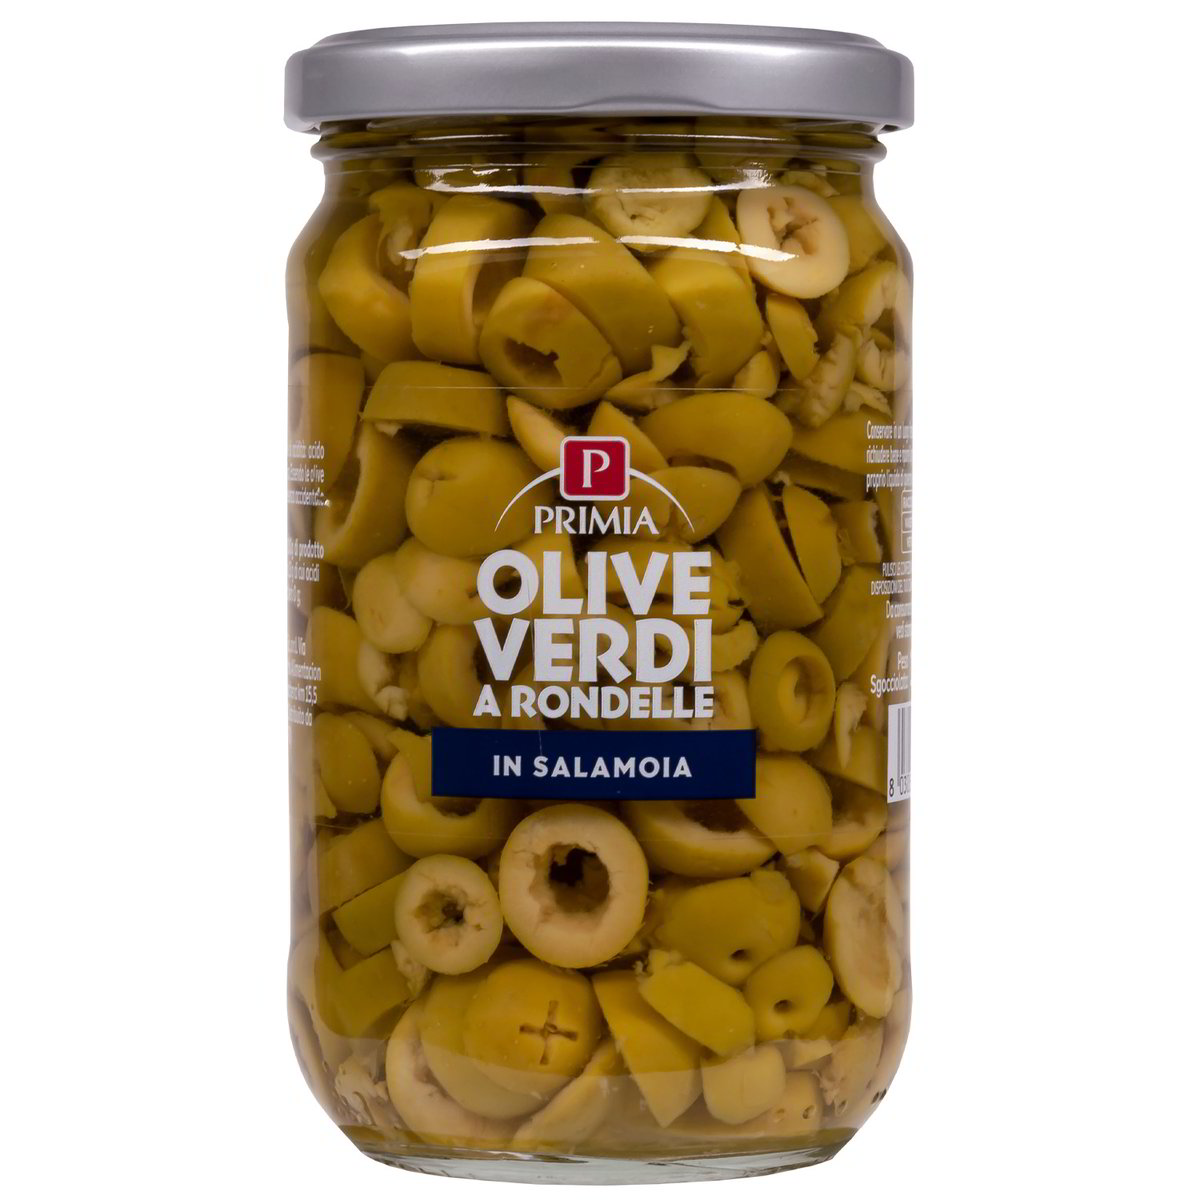 Olive verdi a rondelle in salamoia